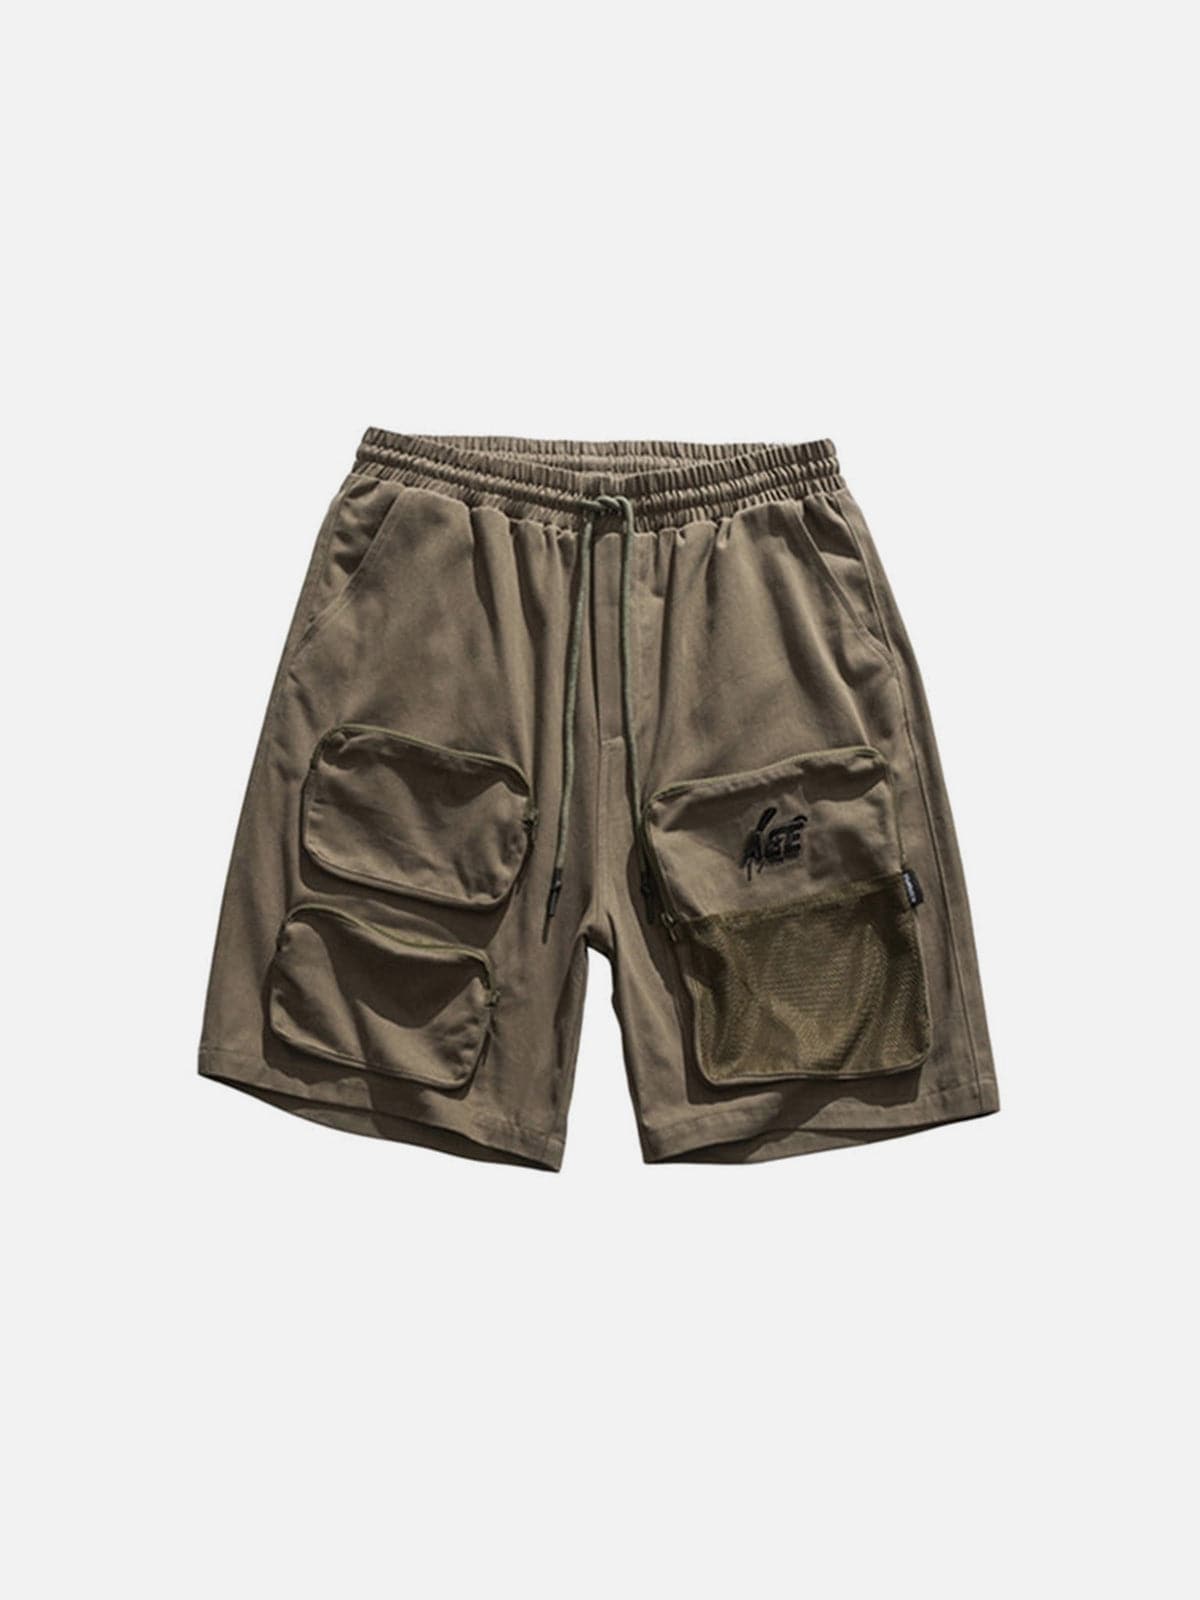 Multi Pockets Letters Drawstring Shorts Streetwear Brand Techwear Combat Tactical YUGEN THEORY